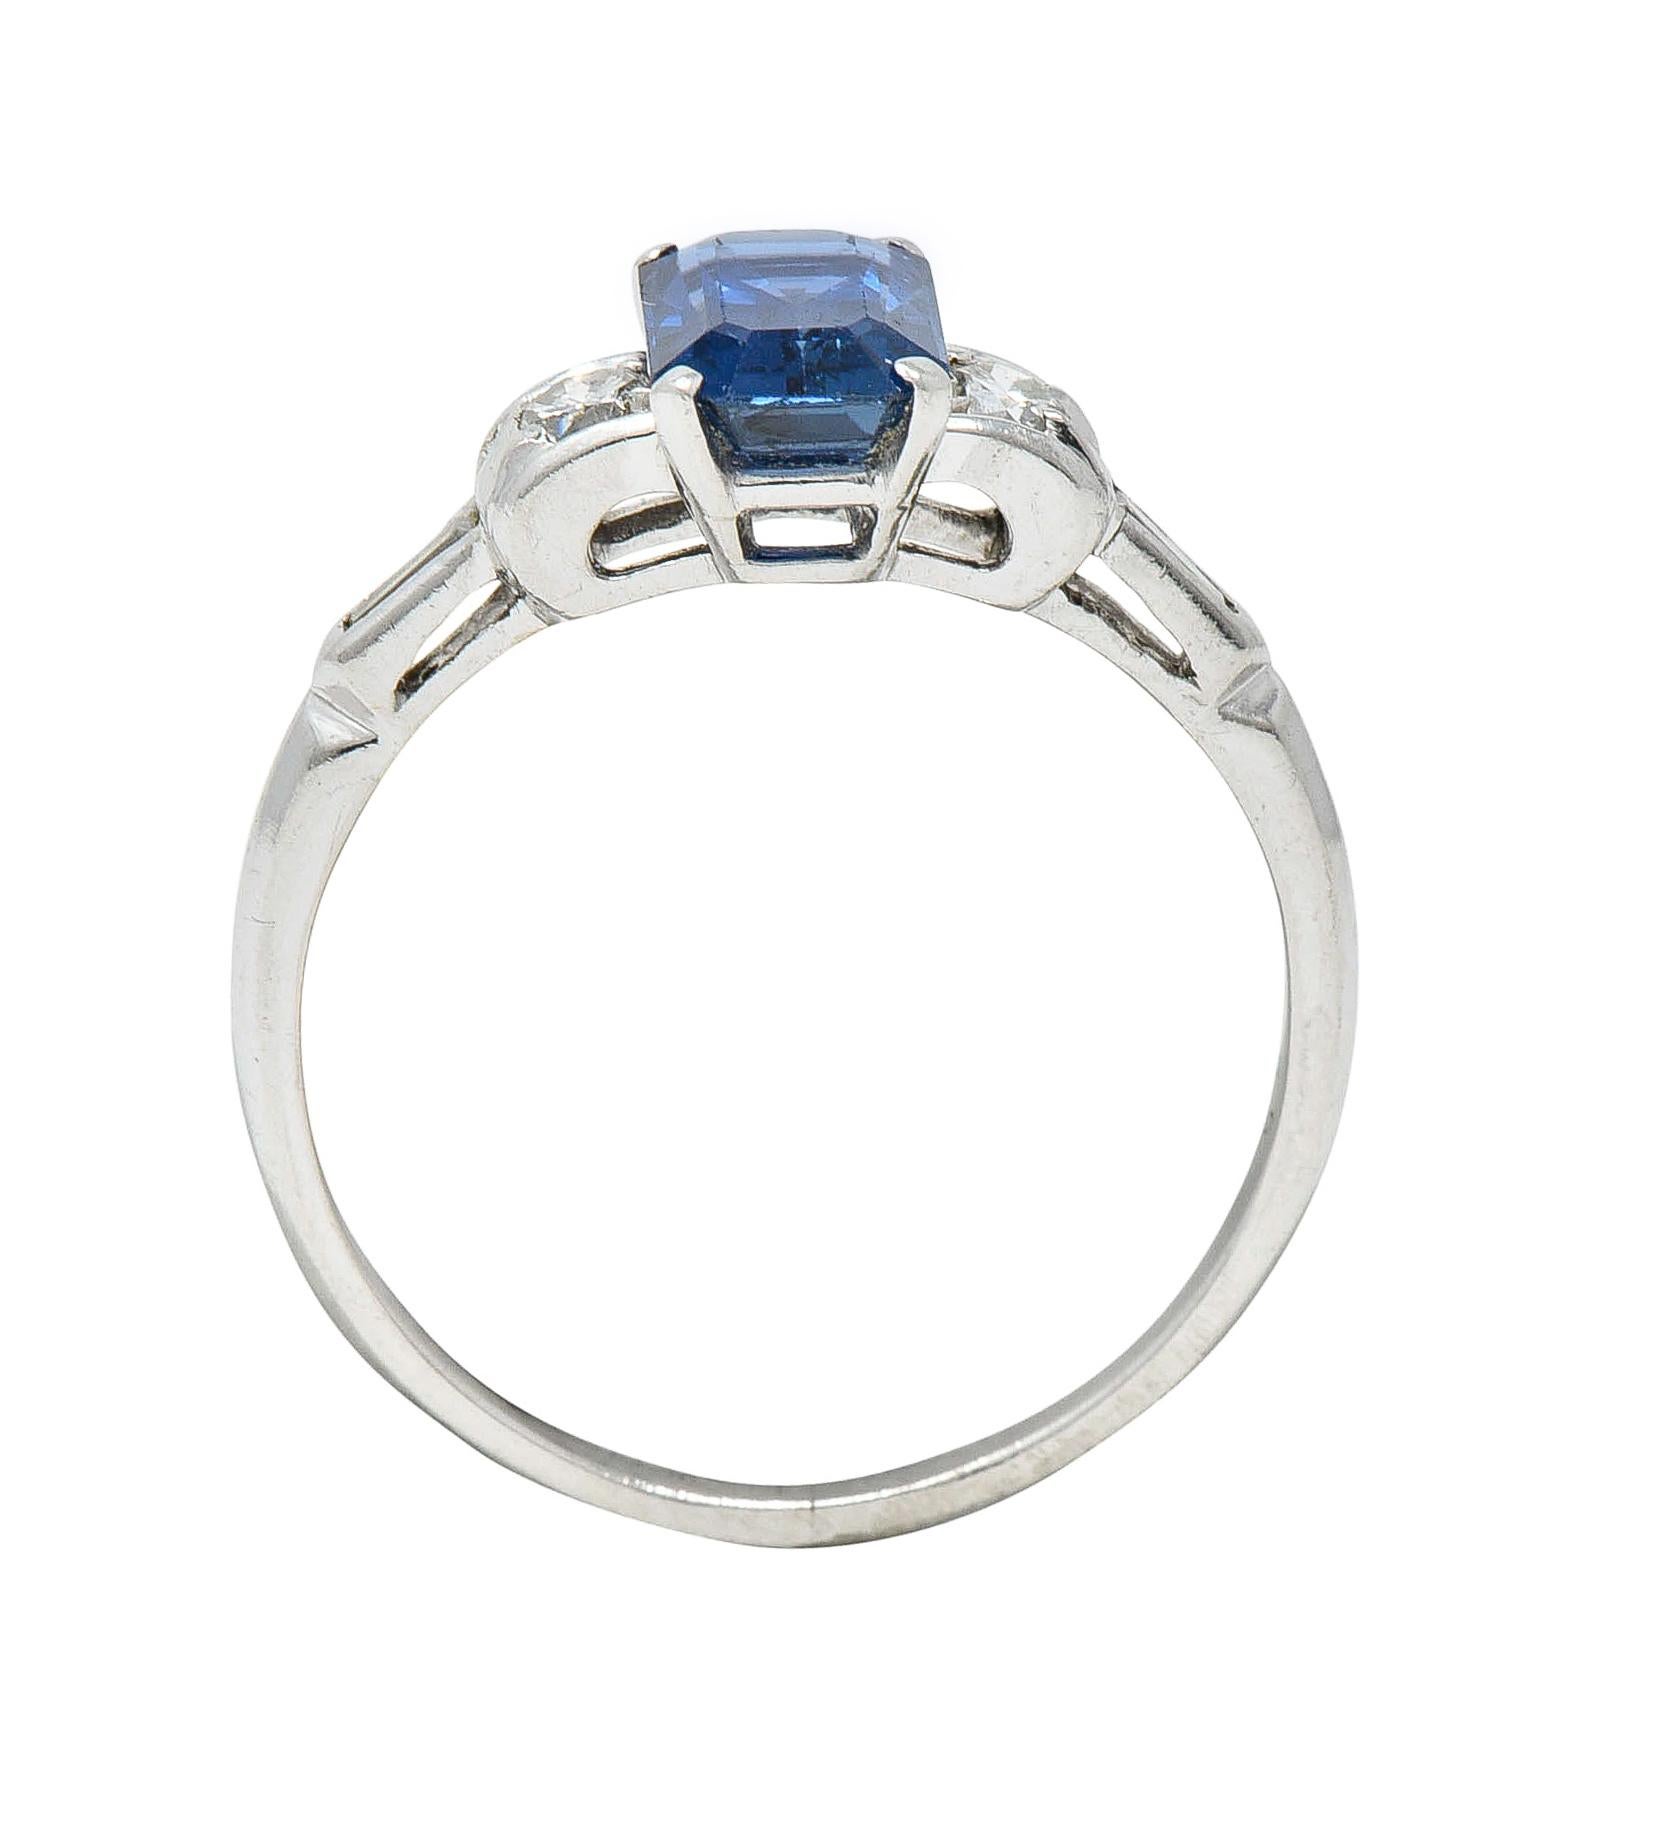 Bailey Banks & Biddle 1.67 CTW Emerald Cut Sapphire Diamond Platinum Ring For Sale 2